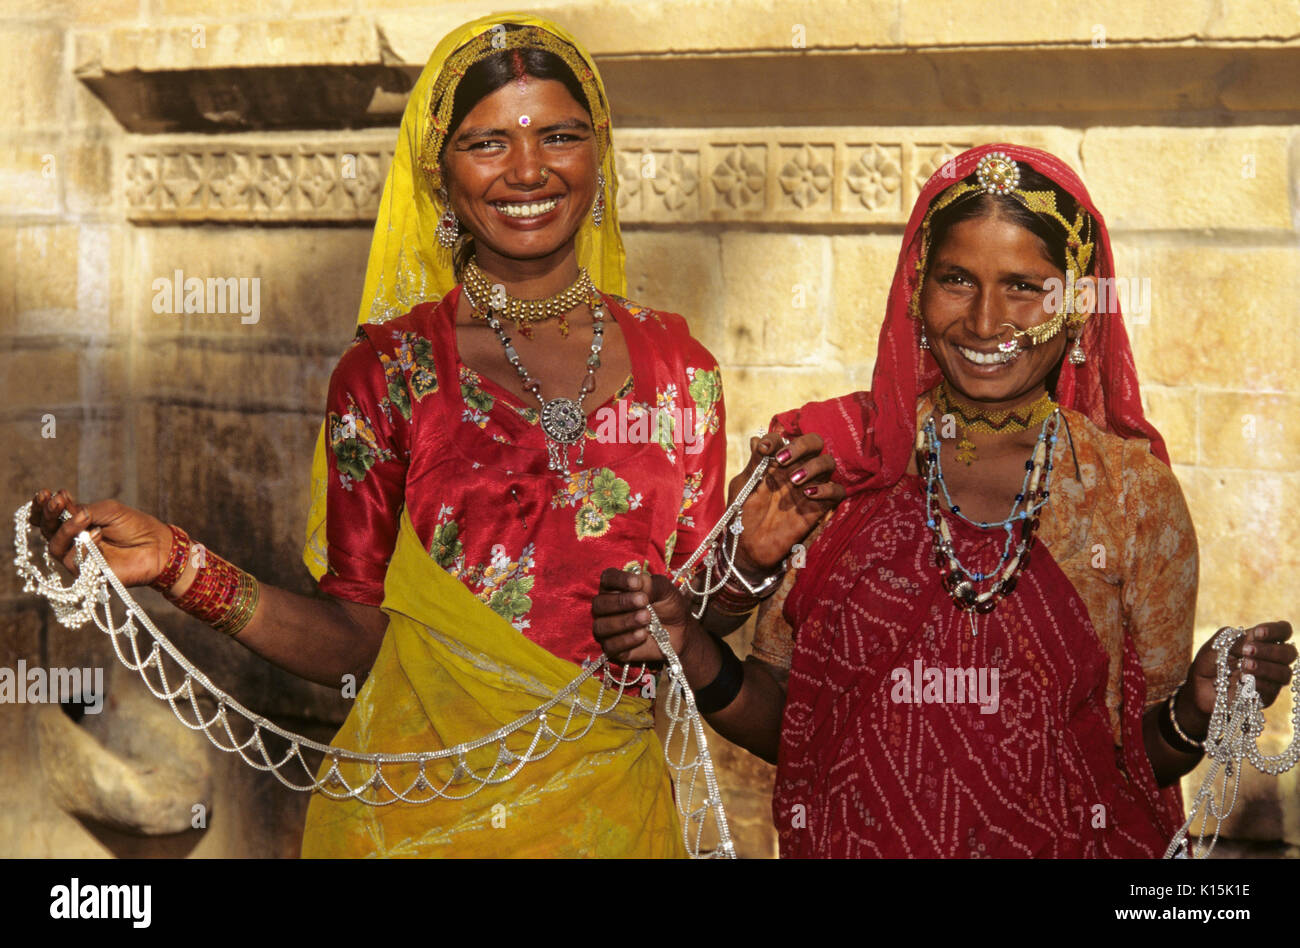 Rajasthani women selling jewelry on street, Jaisalmer, Rajasthan, India Stock Photo